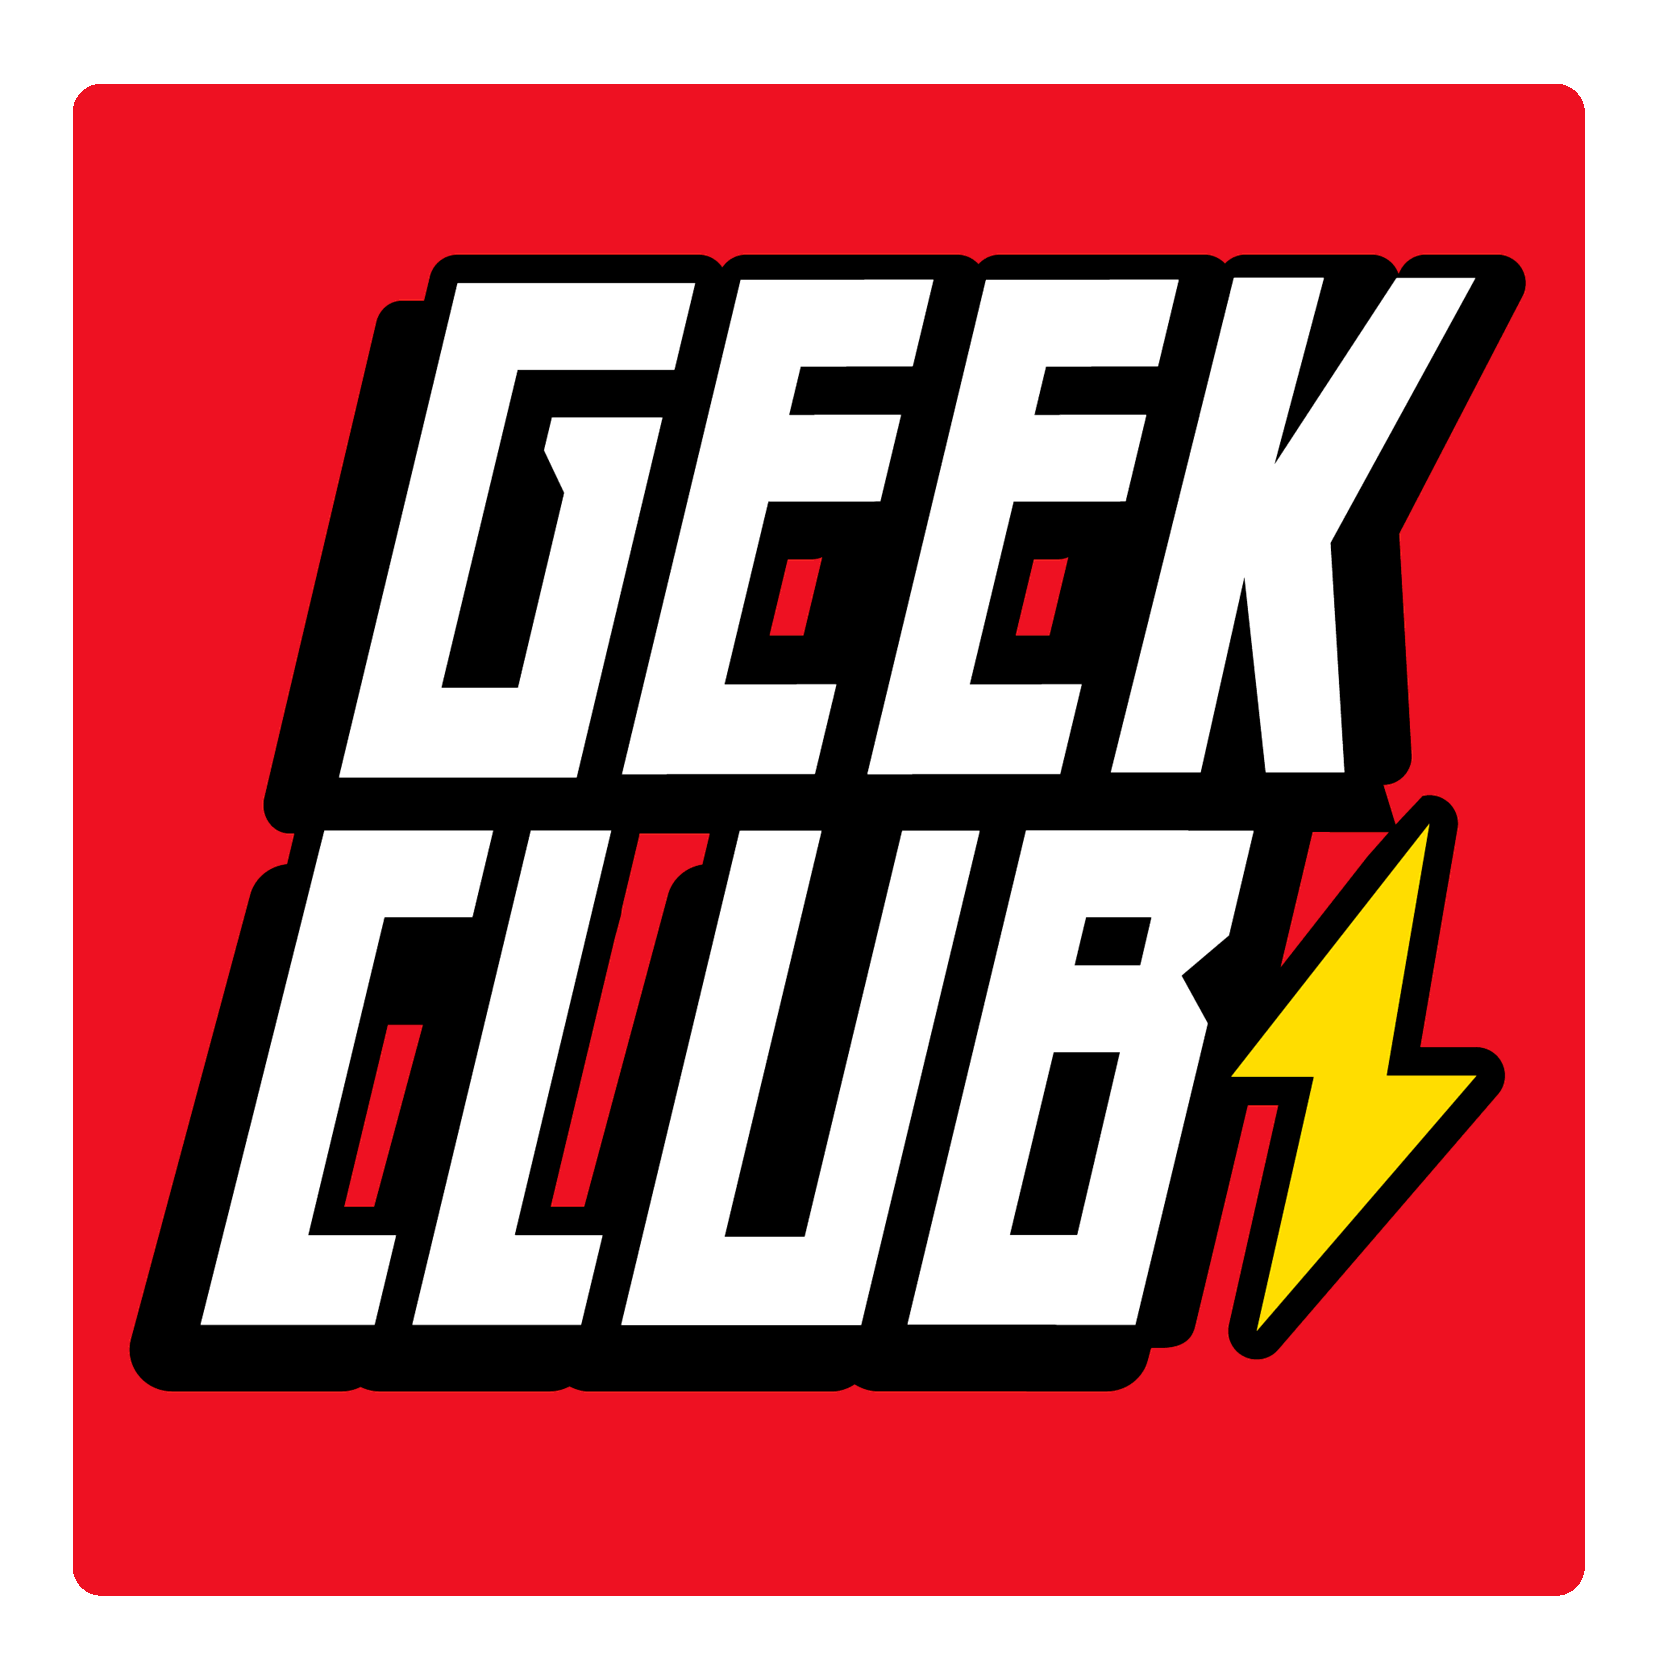 Geek Club